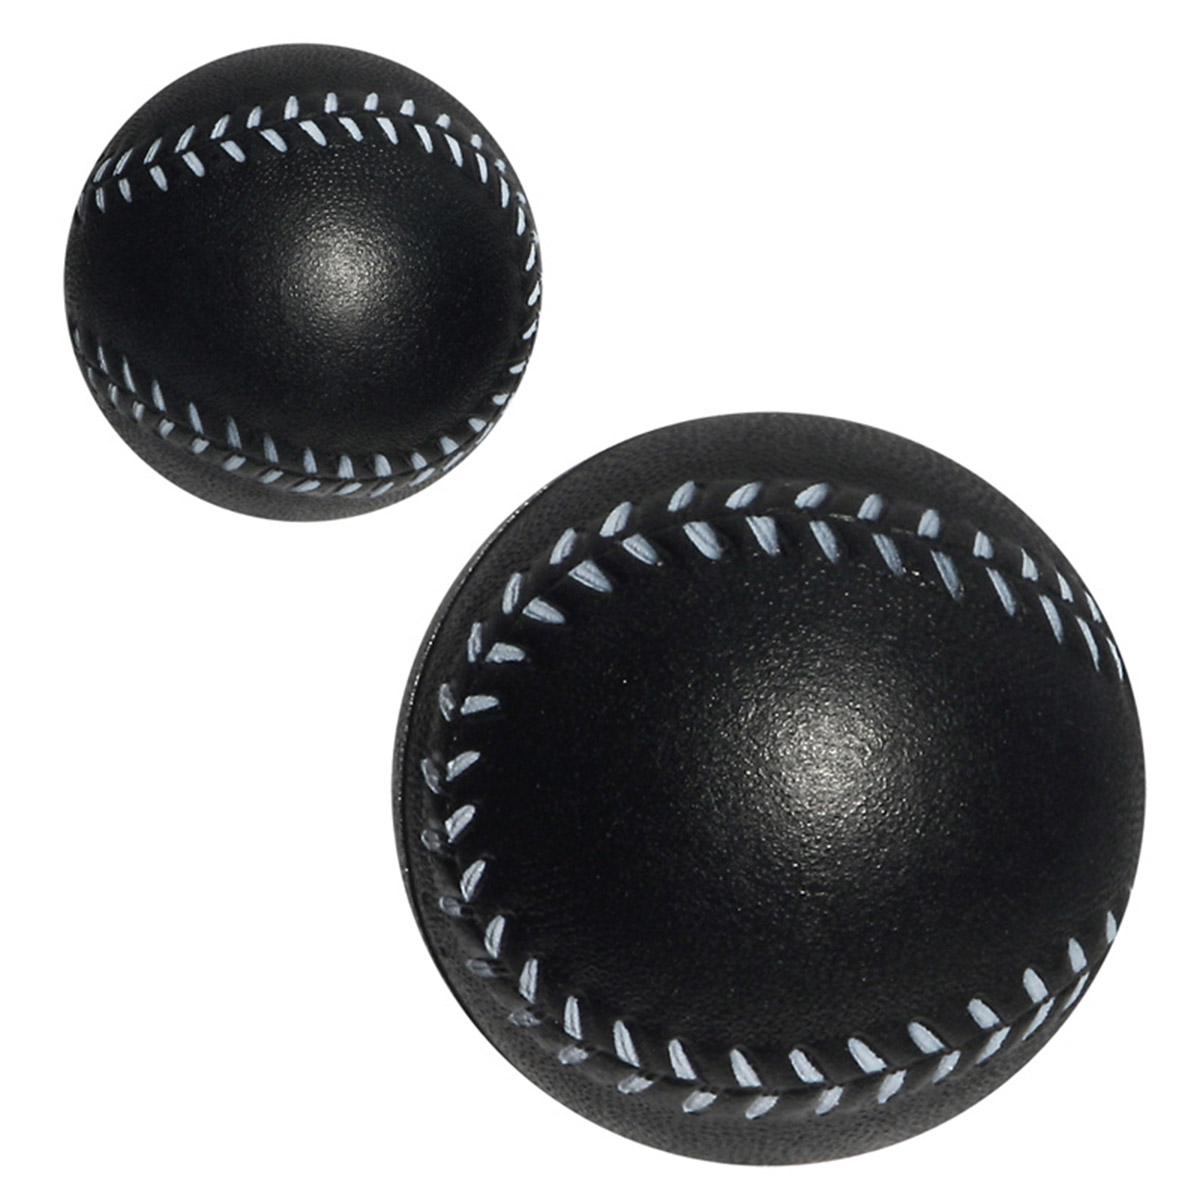 Black Baseball Stress Ball